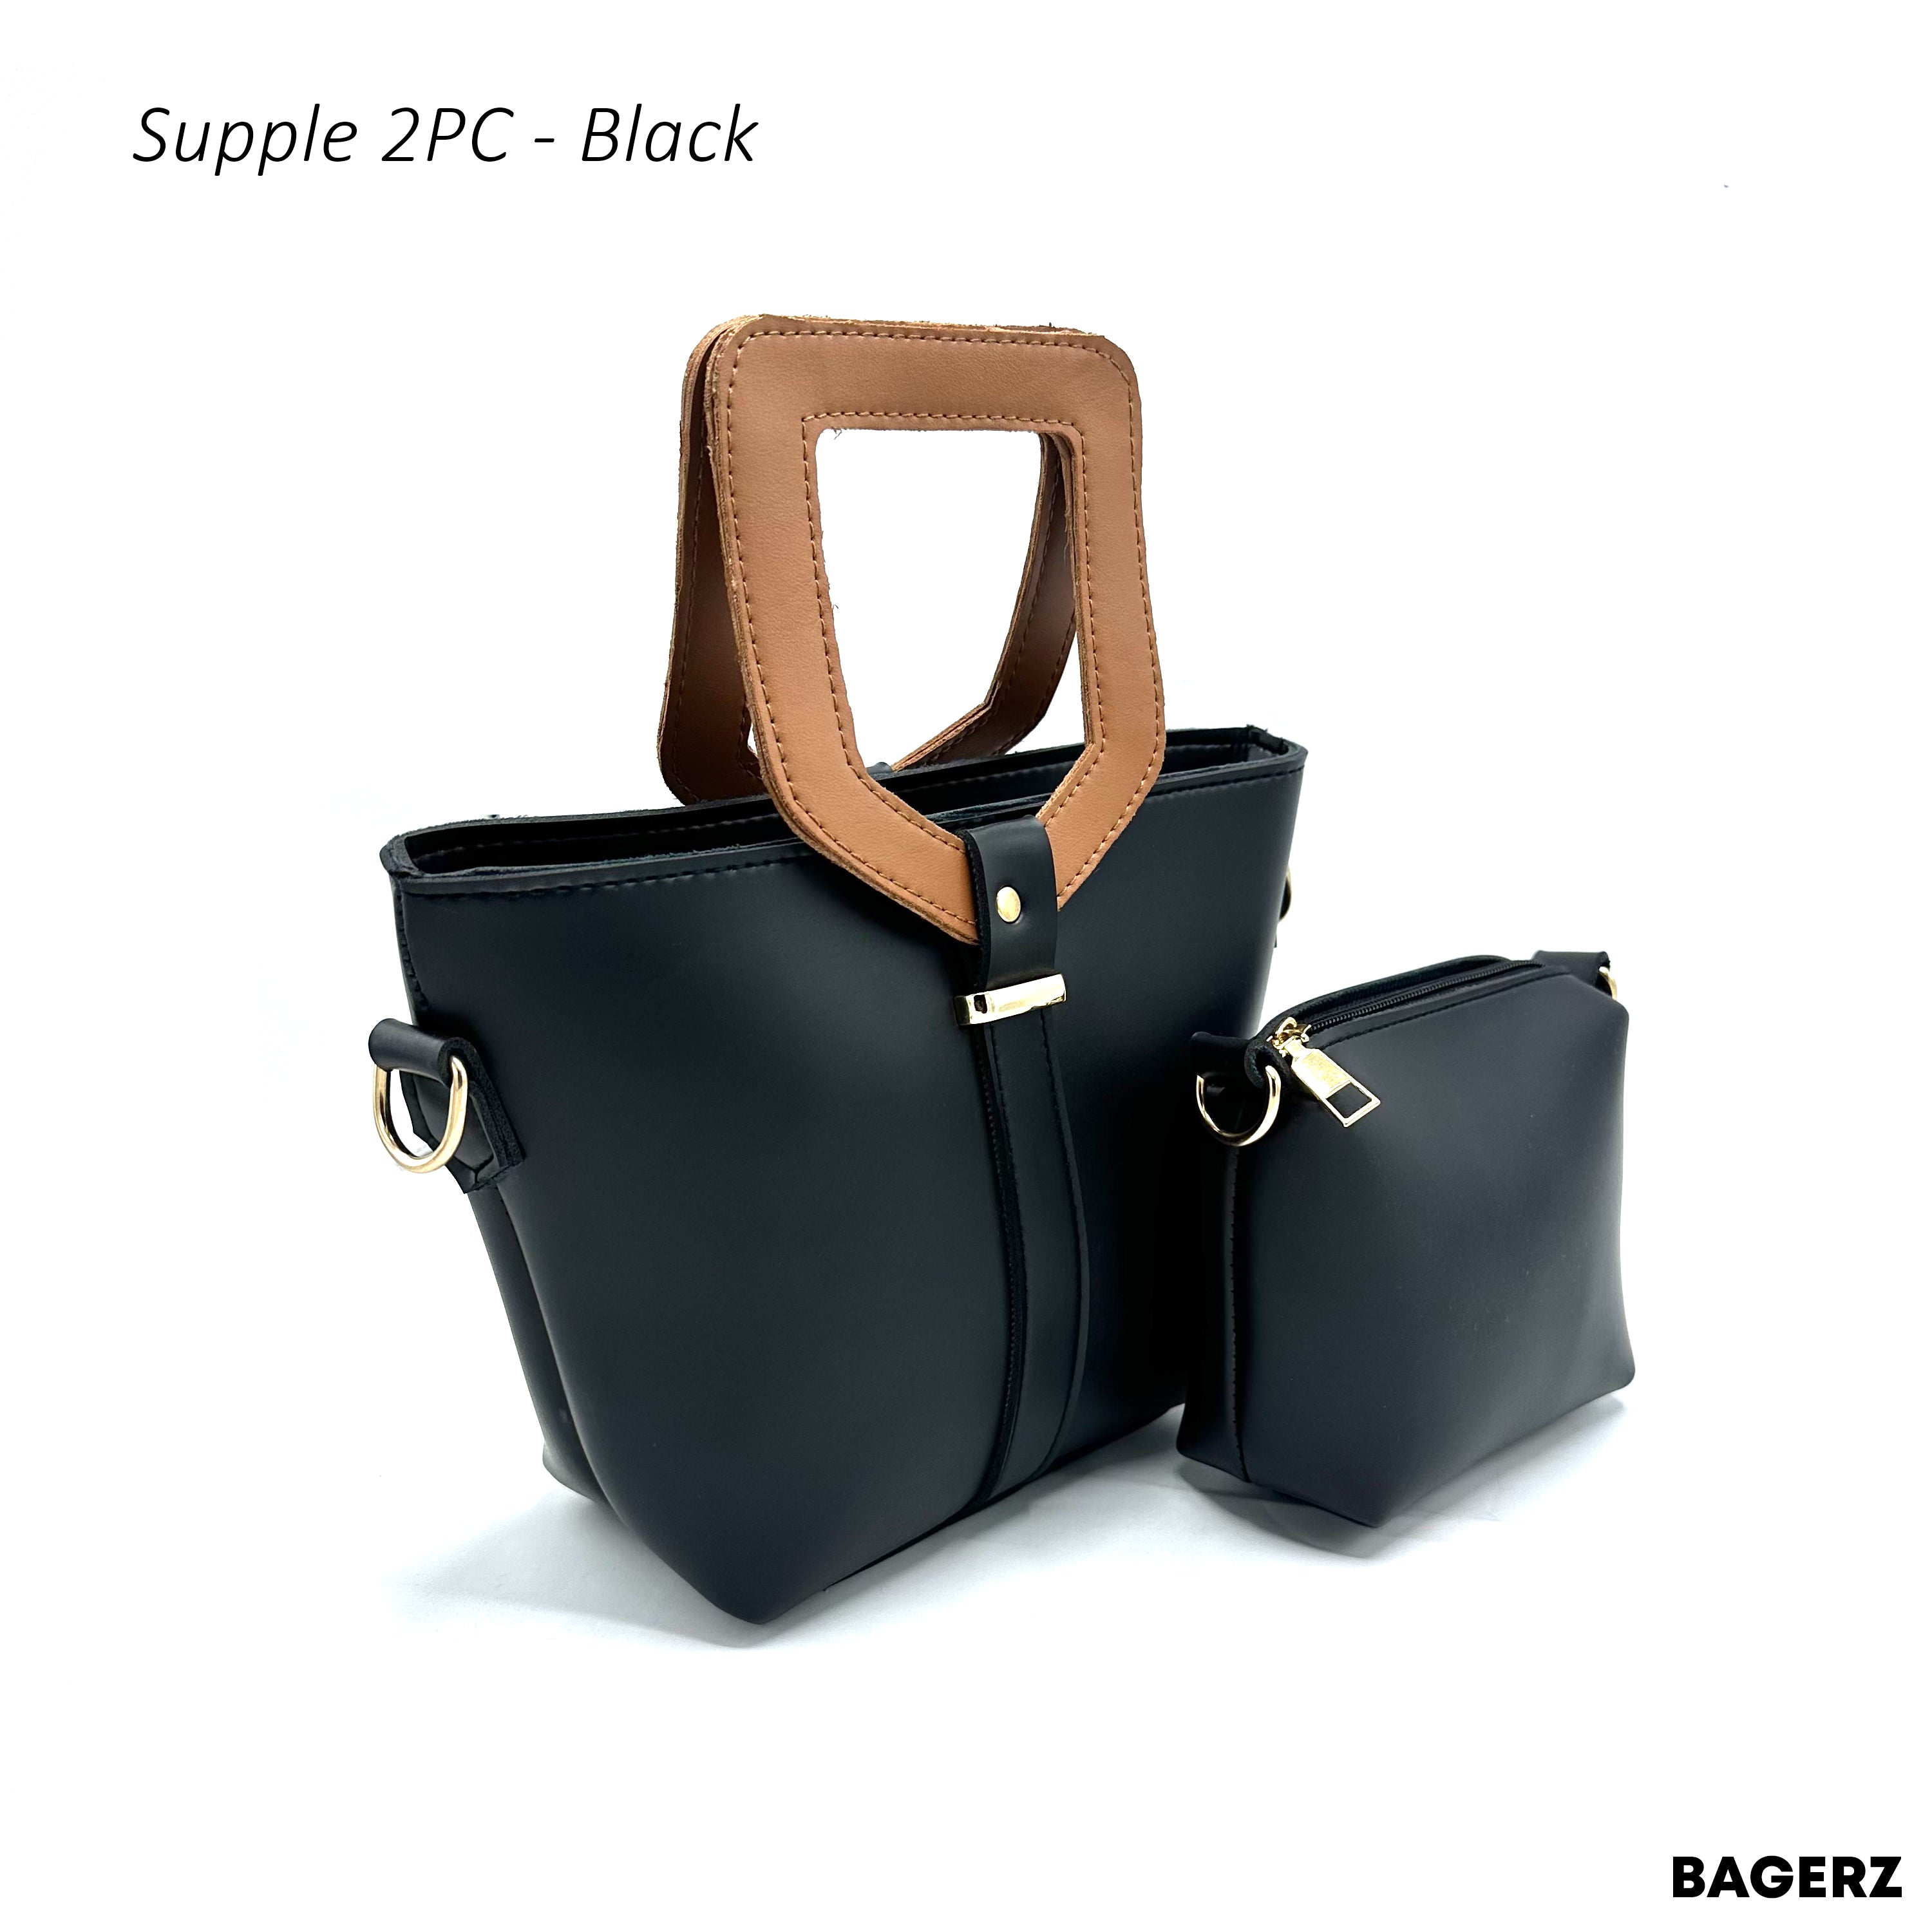 Supple 2PC - Black